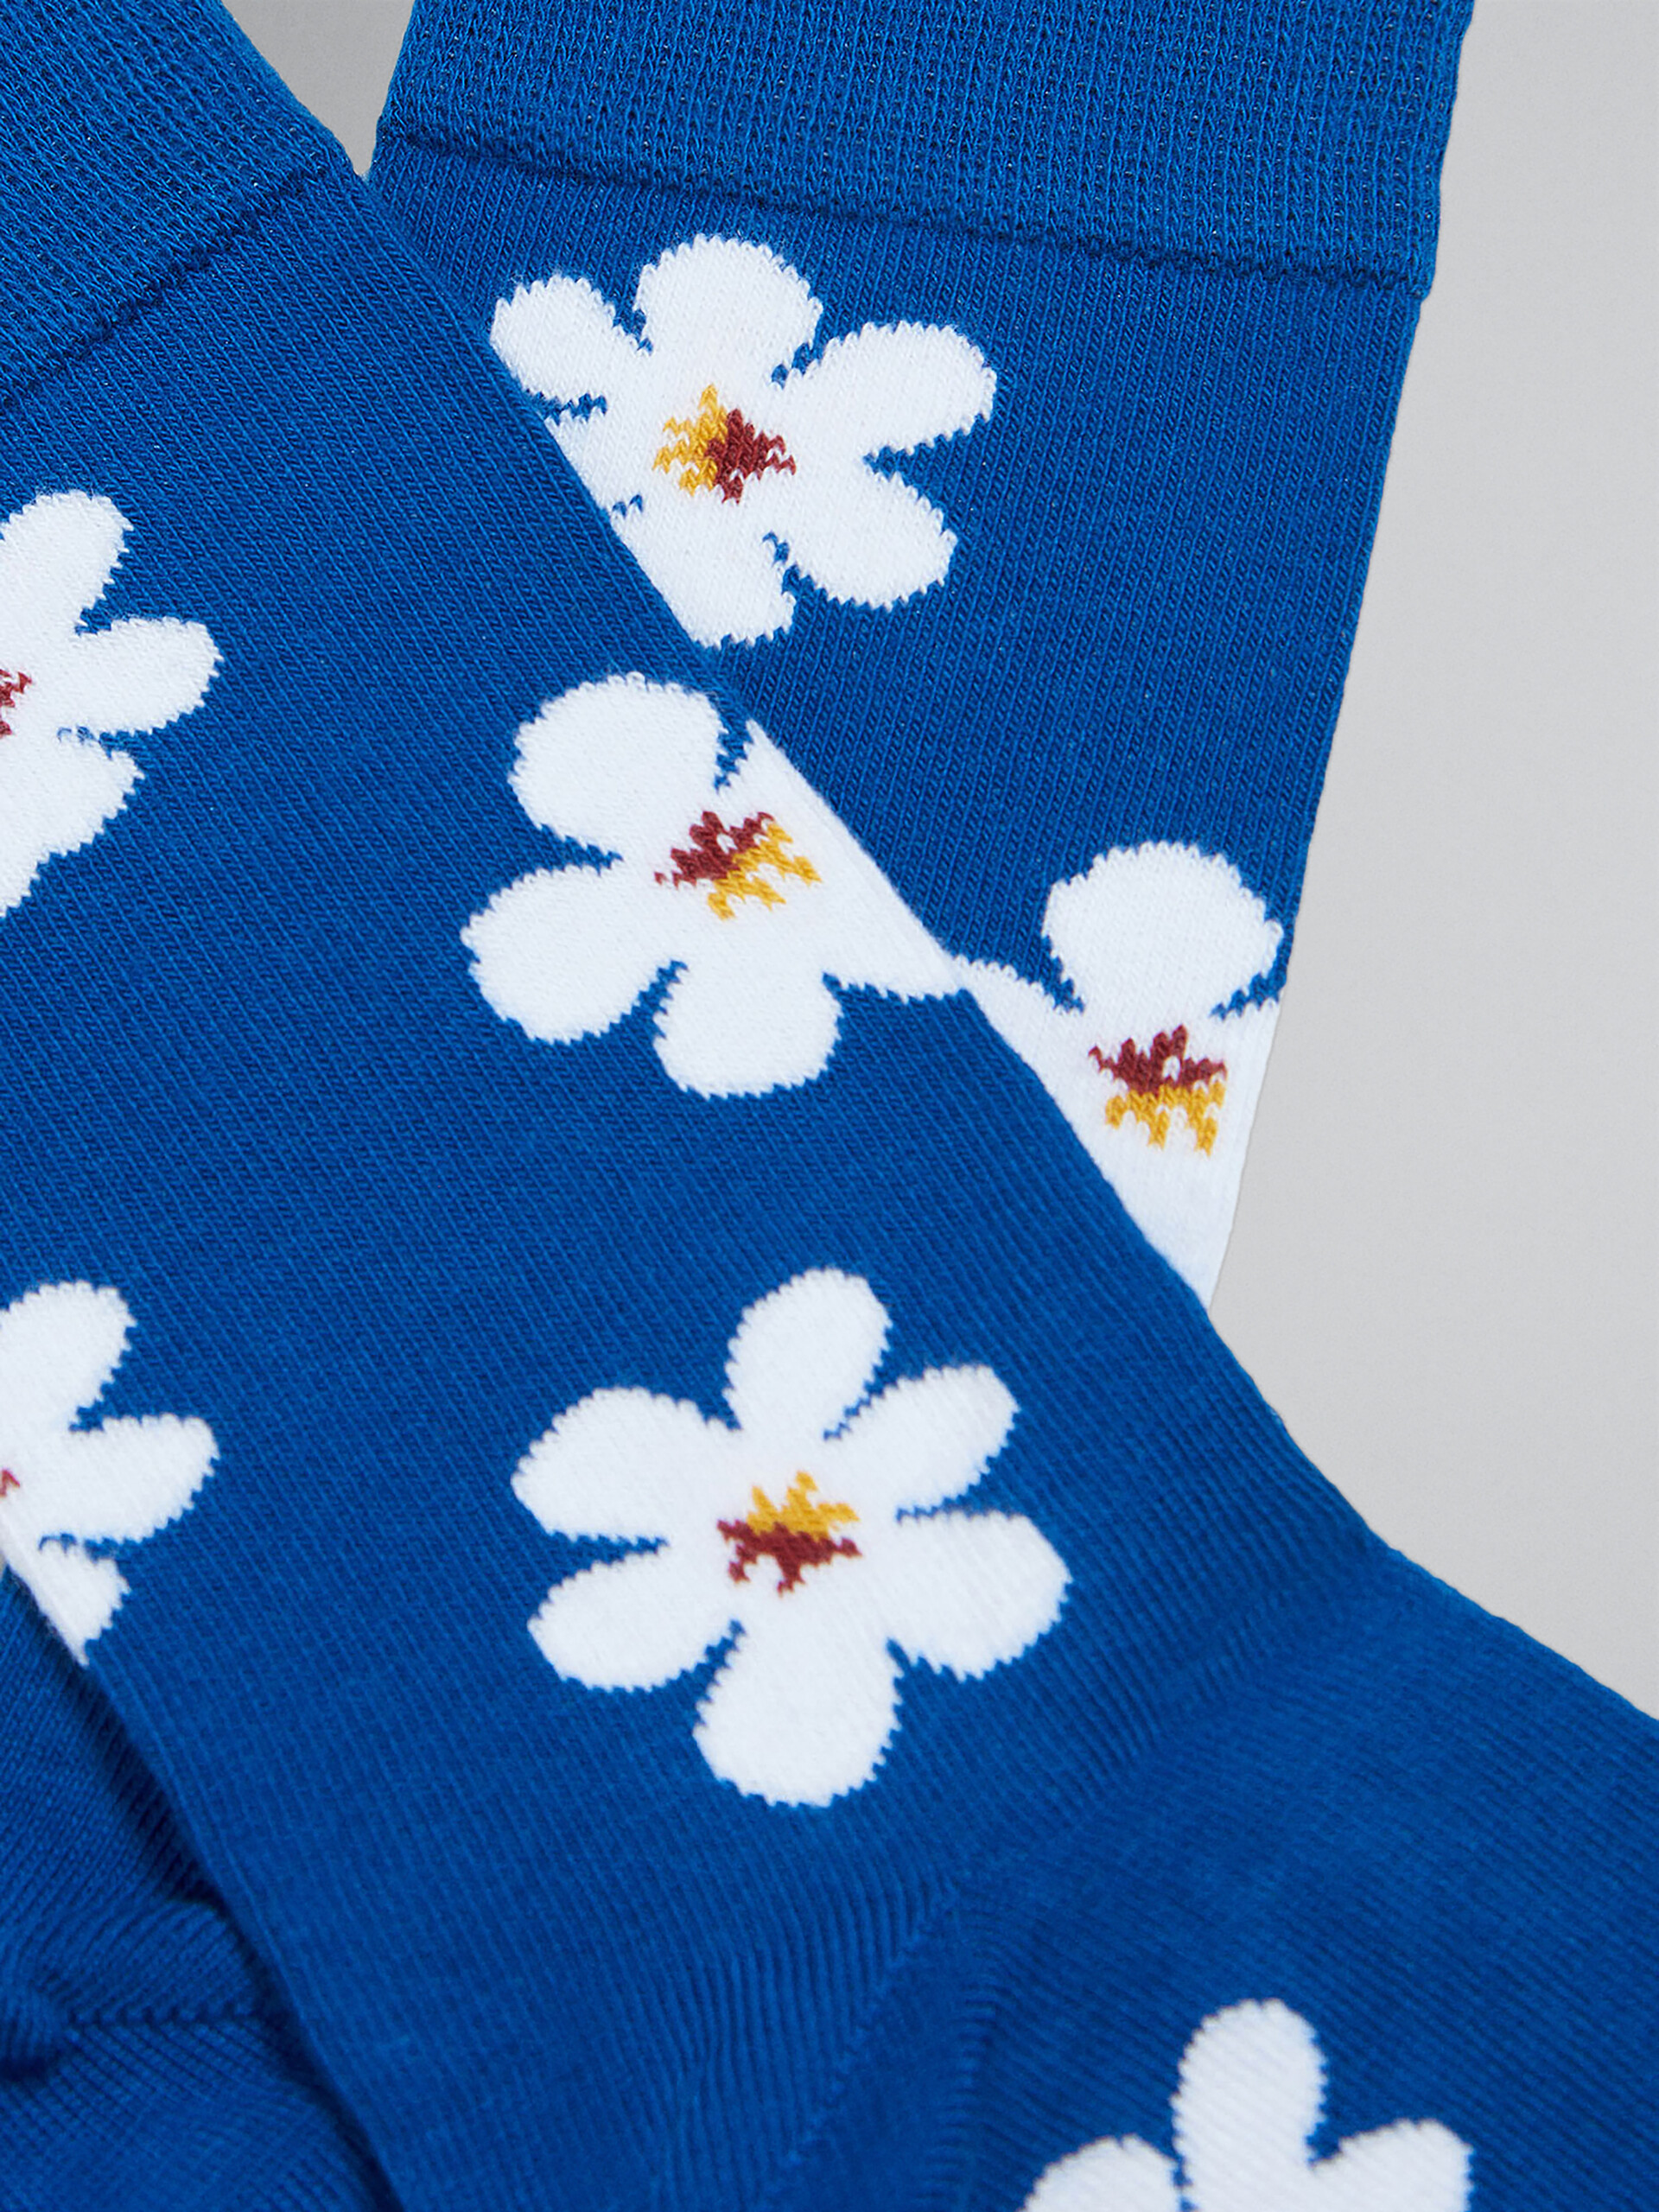 Blue socks with jacquard Daisy motif - Socks - Image 2